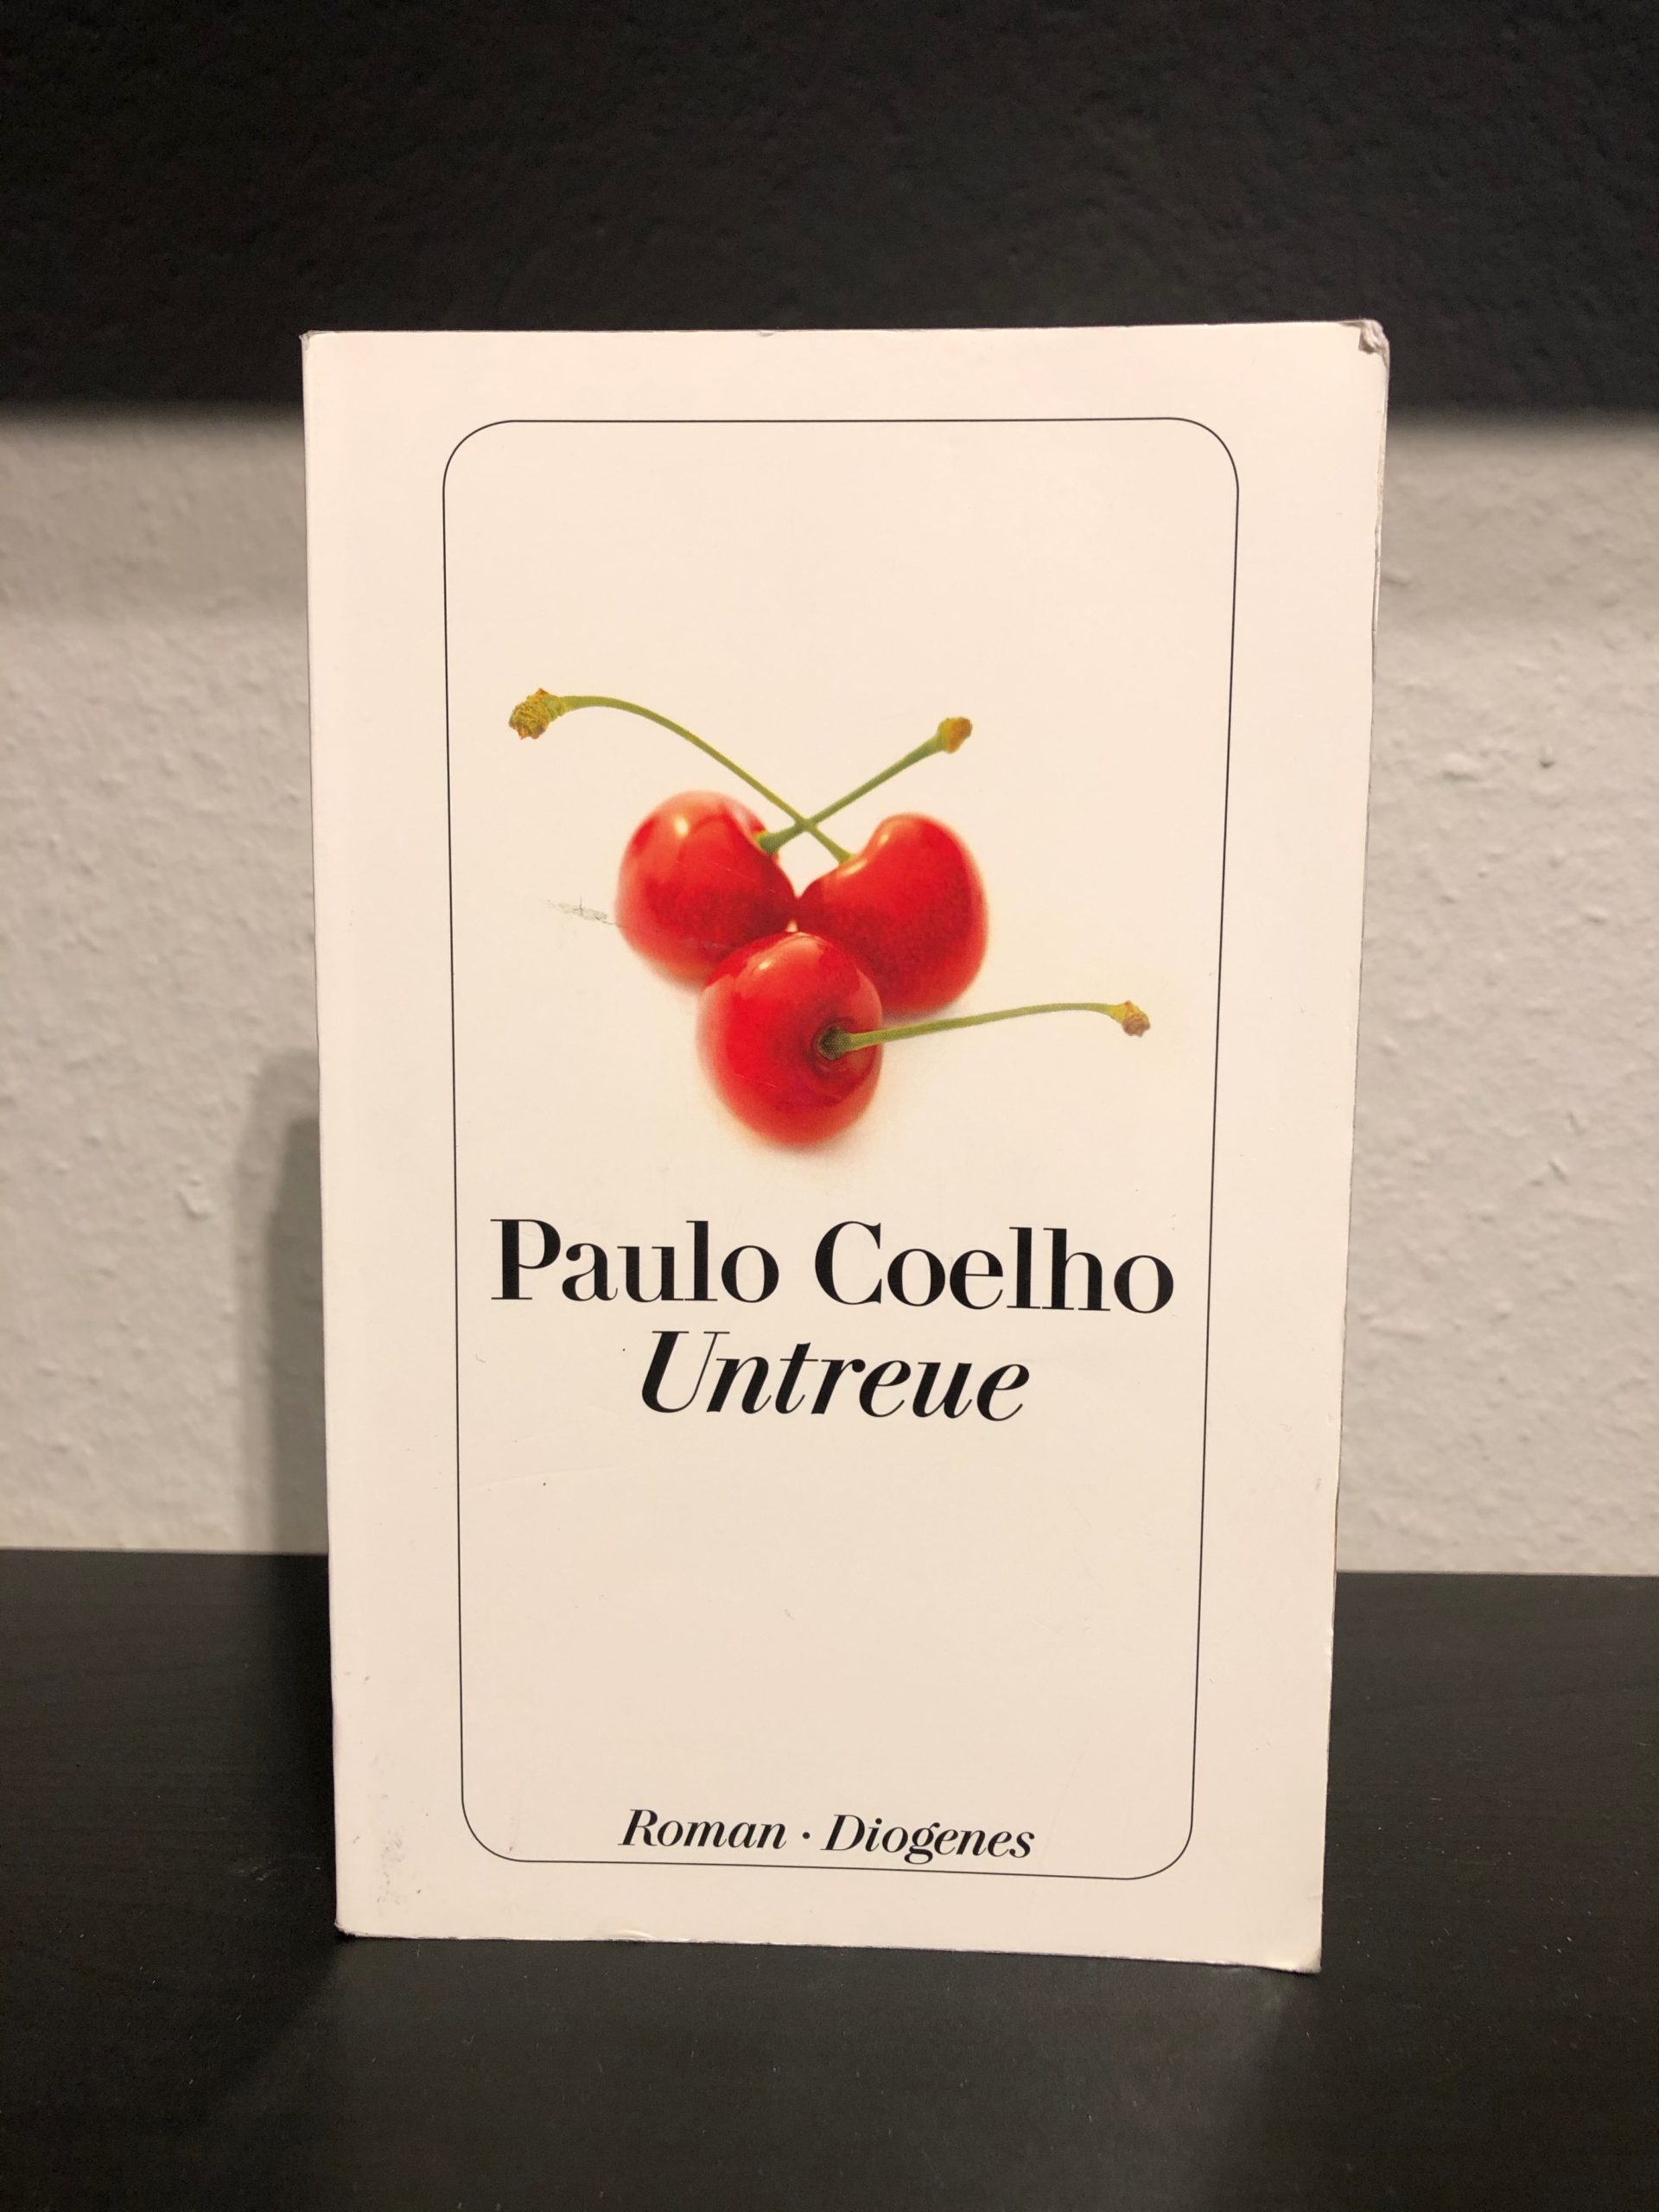 Untreue - Paulo Coelho-image